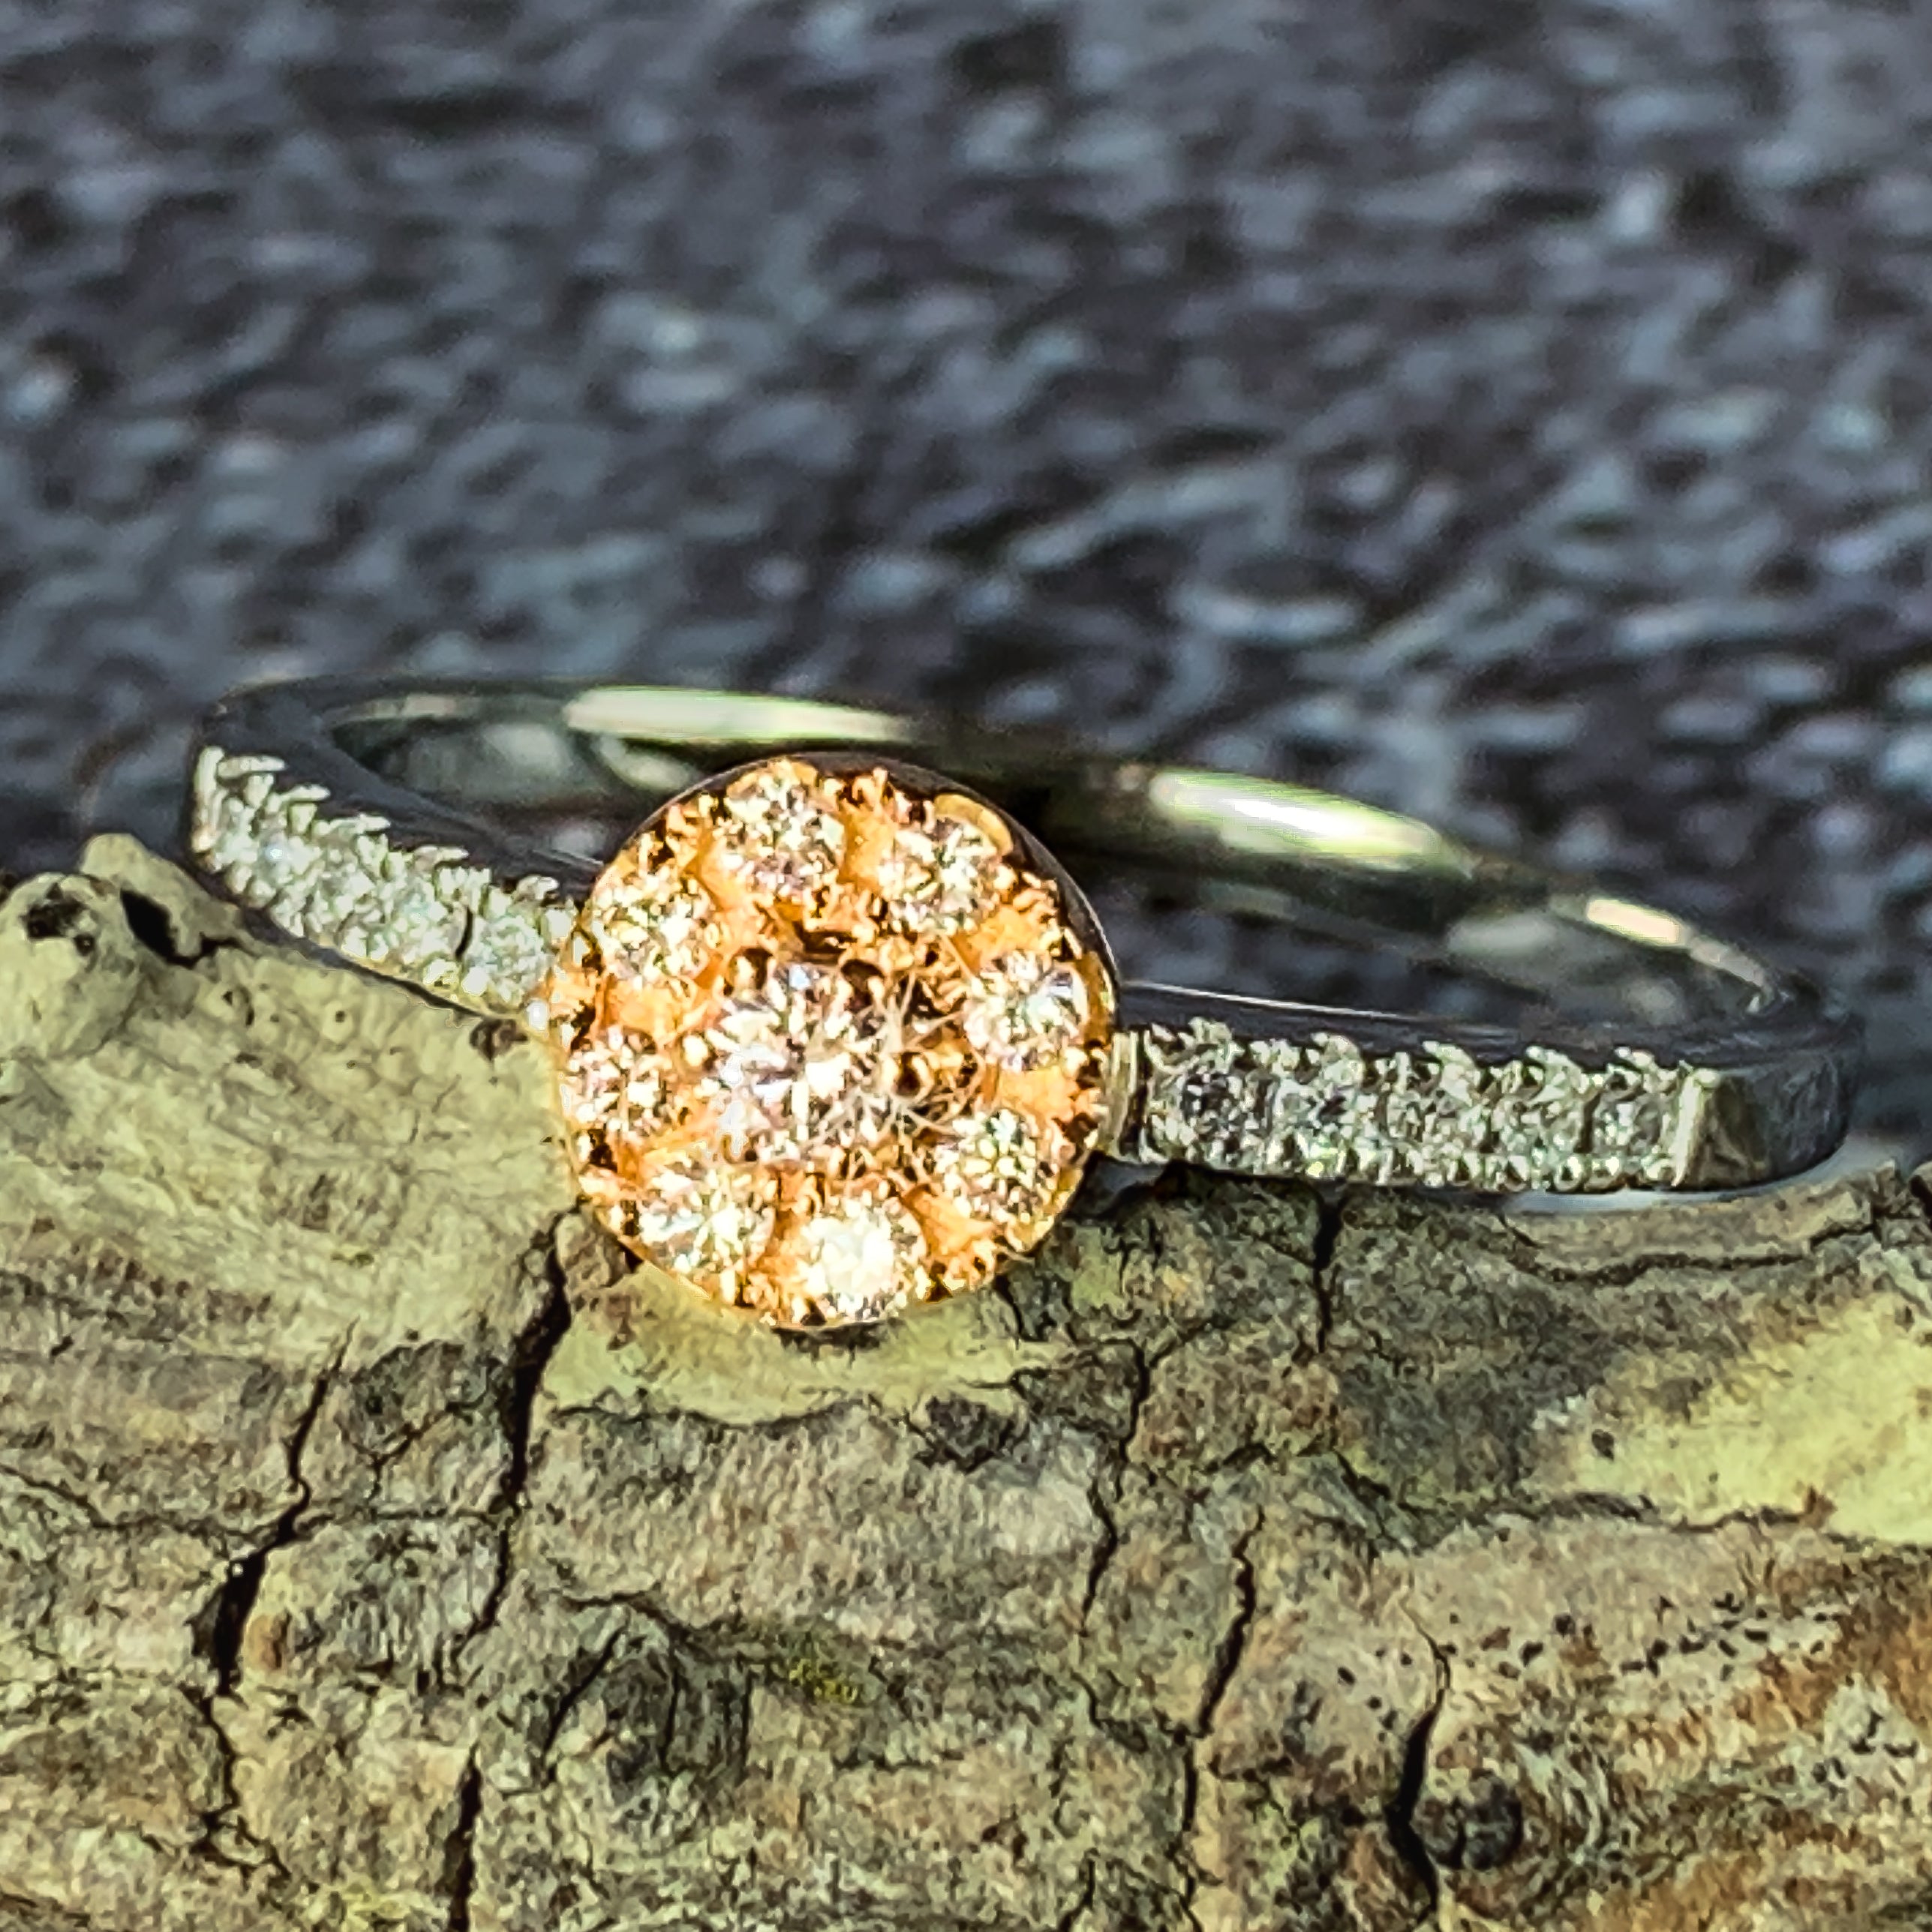 Platinum and 18kt Rose Gold Pink diamond cluster ring - Masterpiece Jewellery Opal & Gems Sydney Australia | Online Shop